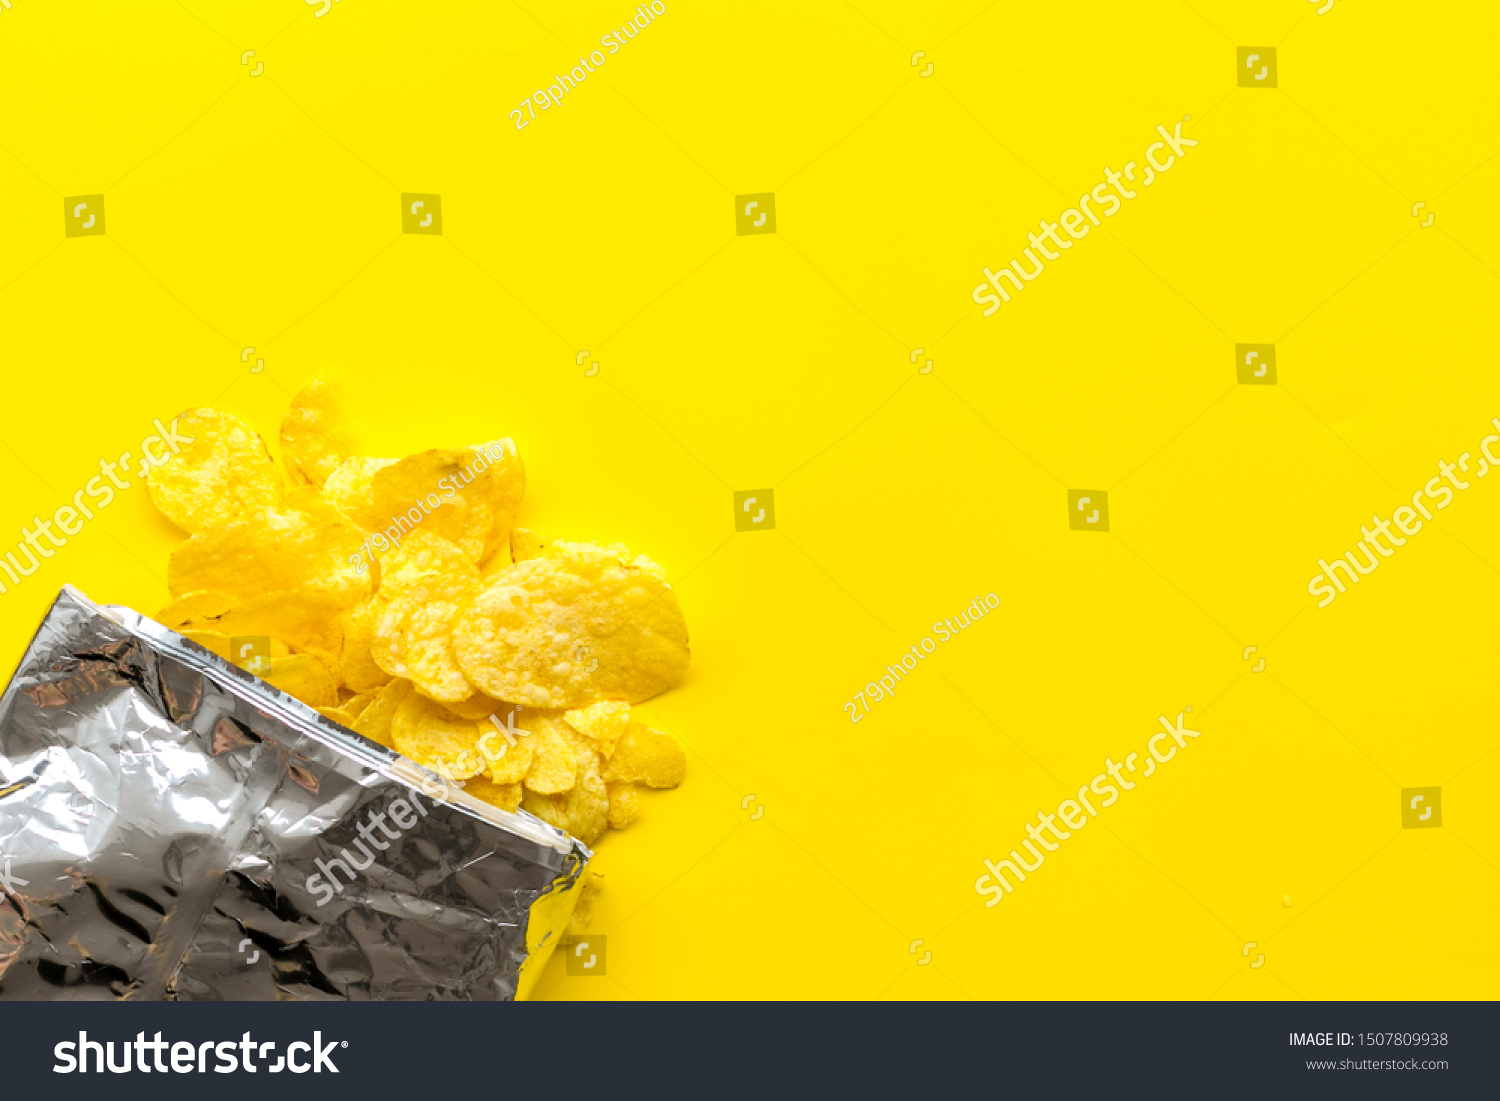 Download Potato Crisps Bag On Yellow Background Stock Photo Edit Now 1507809938 PSD Mockup Templates